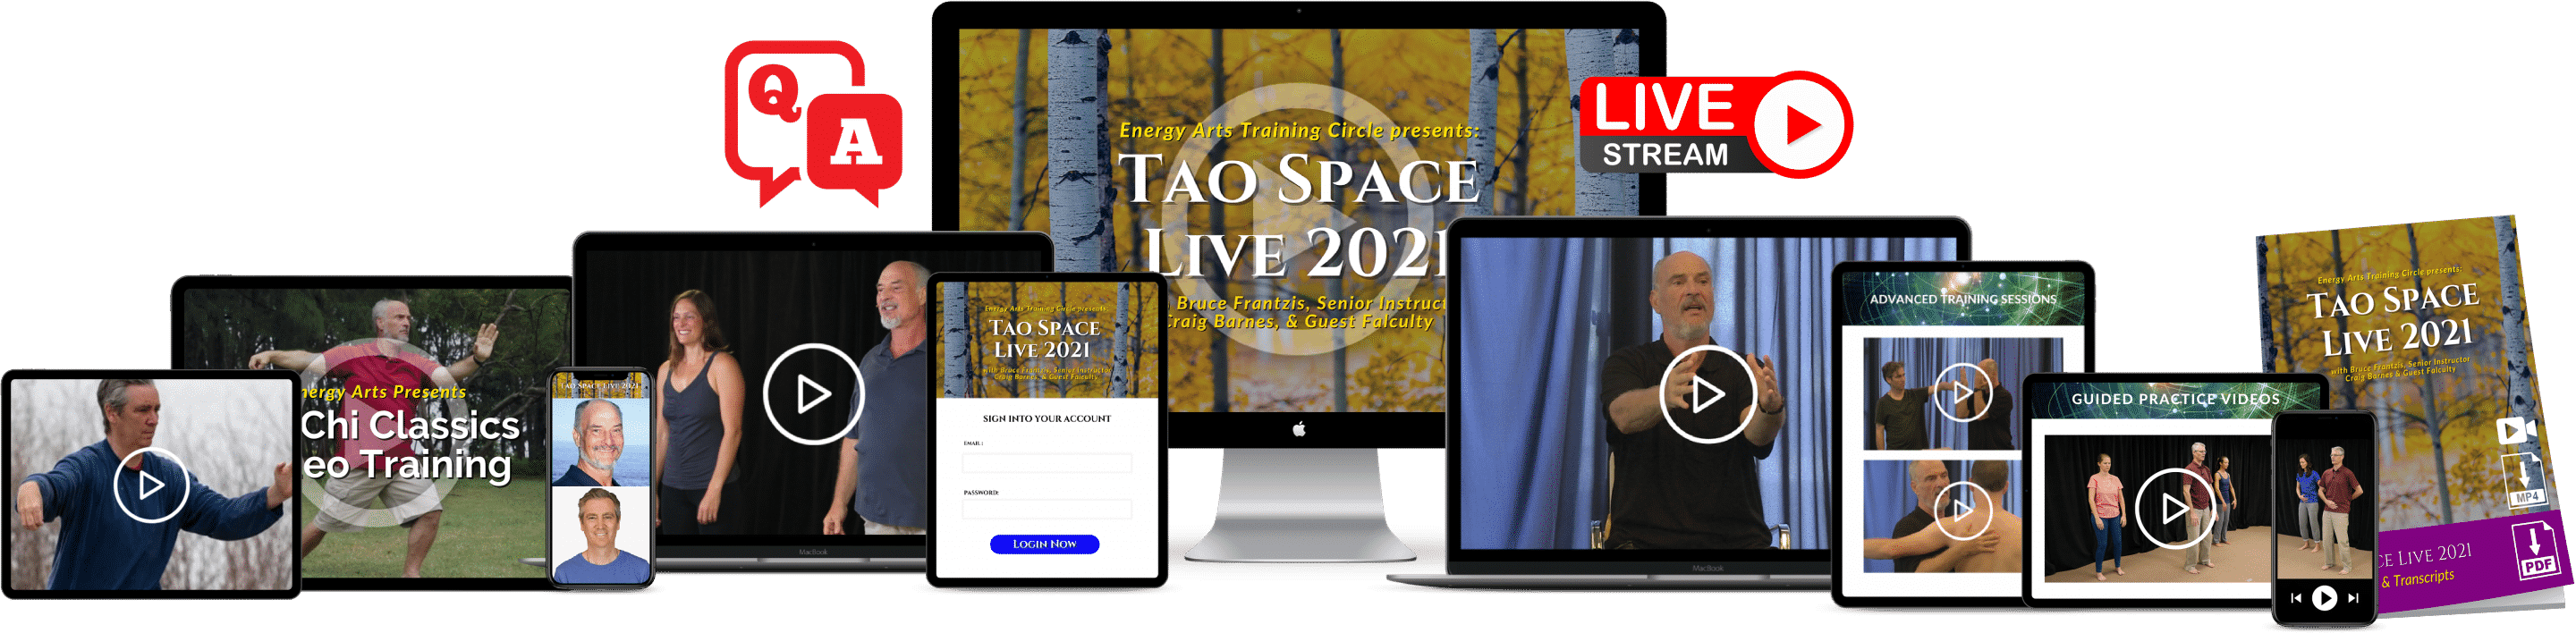 Bruce Frantzis - Tao Space Live 2021